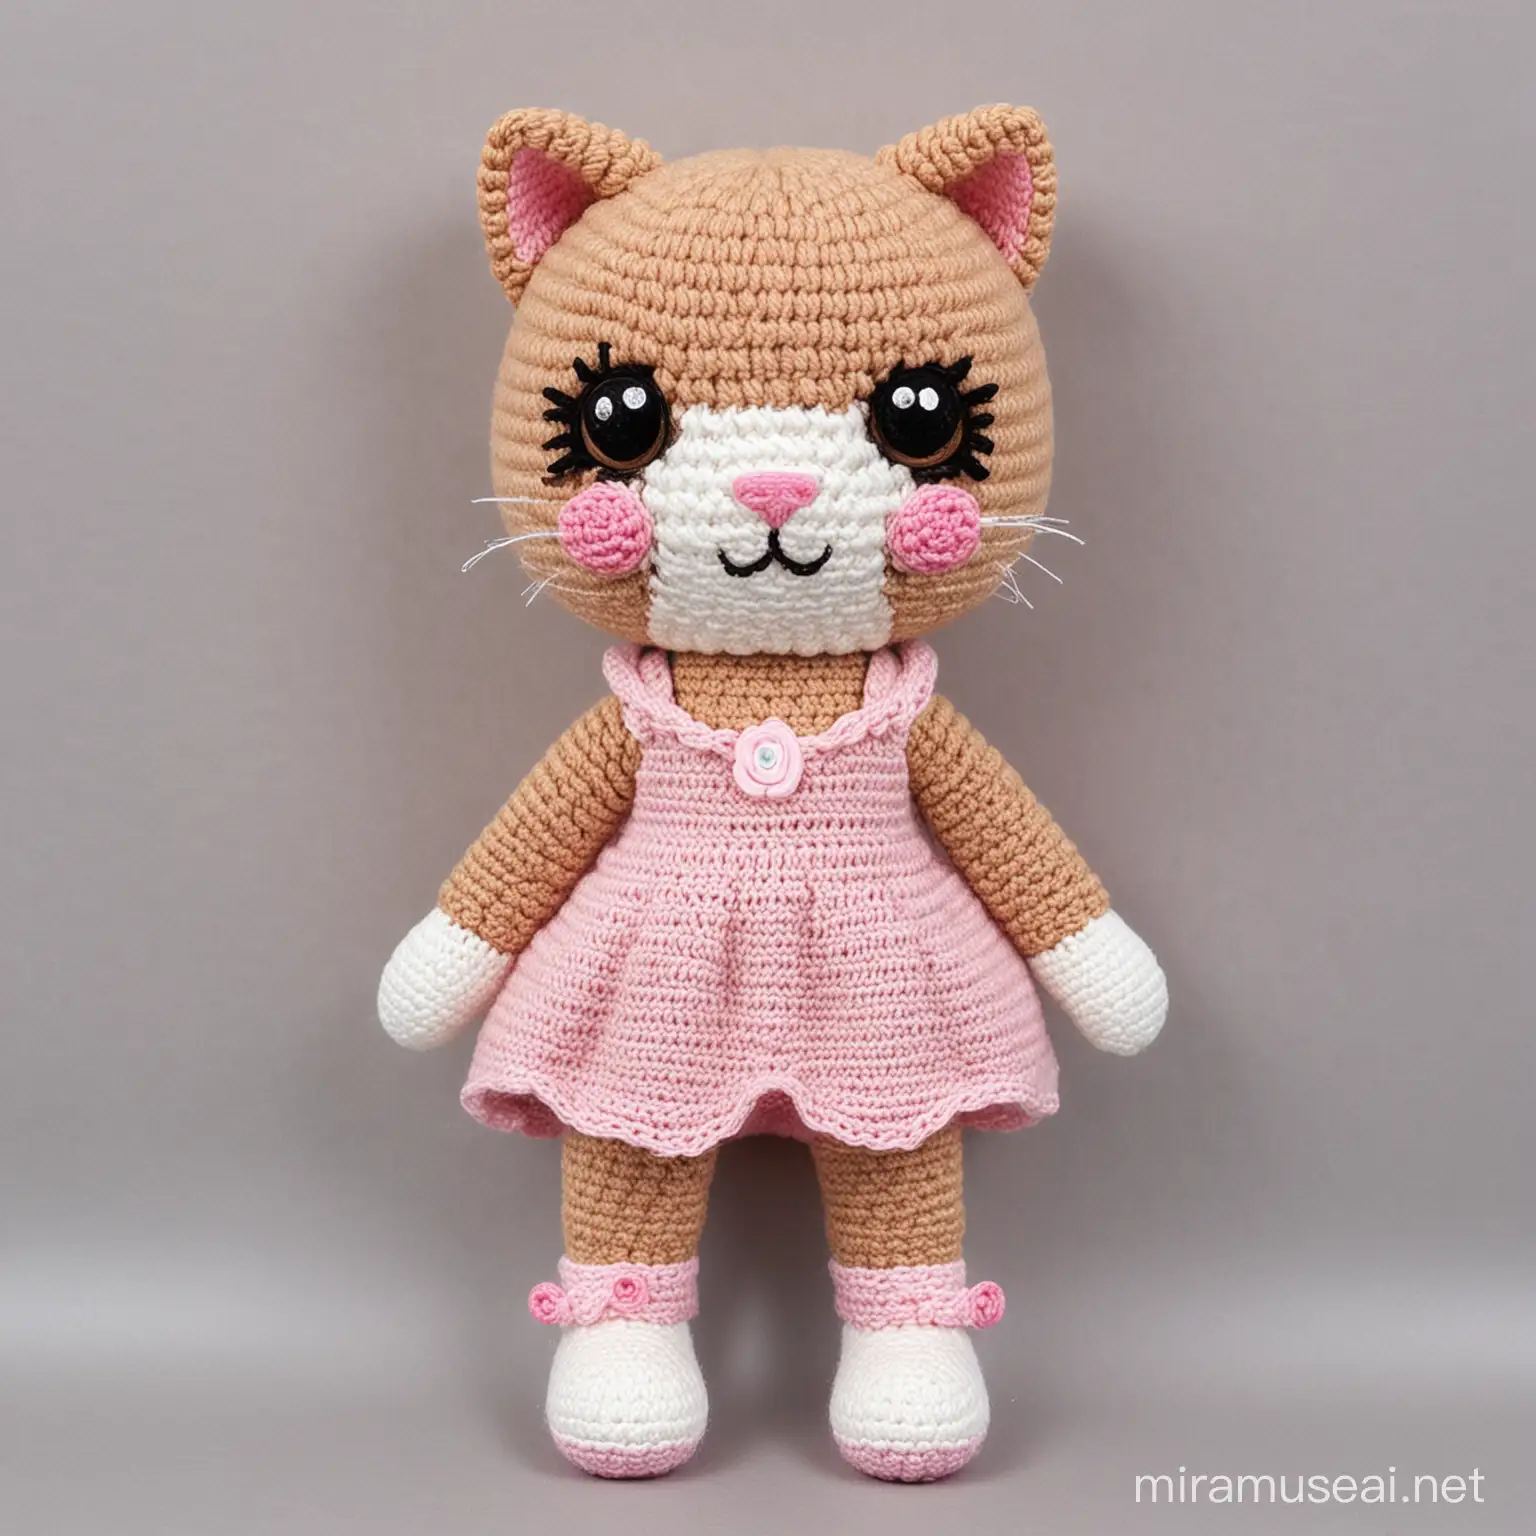 Adorable Crochet Baby Cat Boy in Pink Skirt Dress